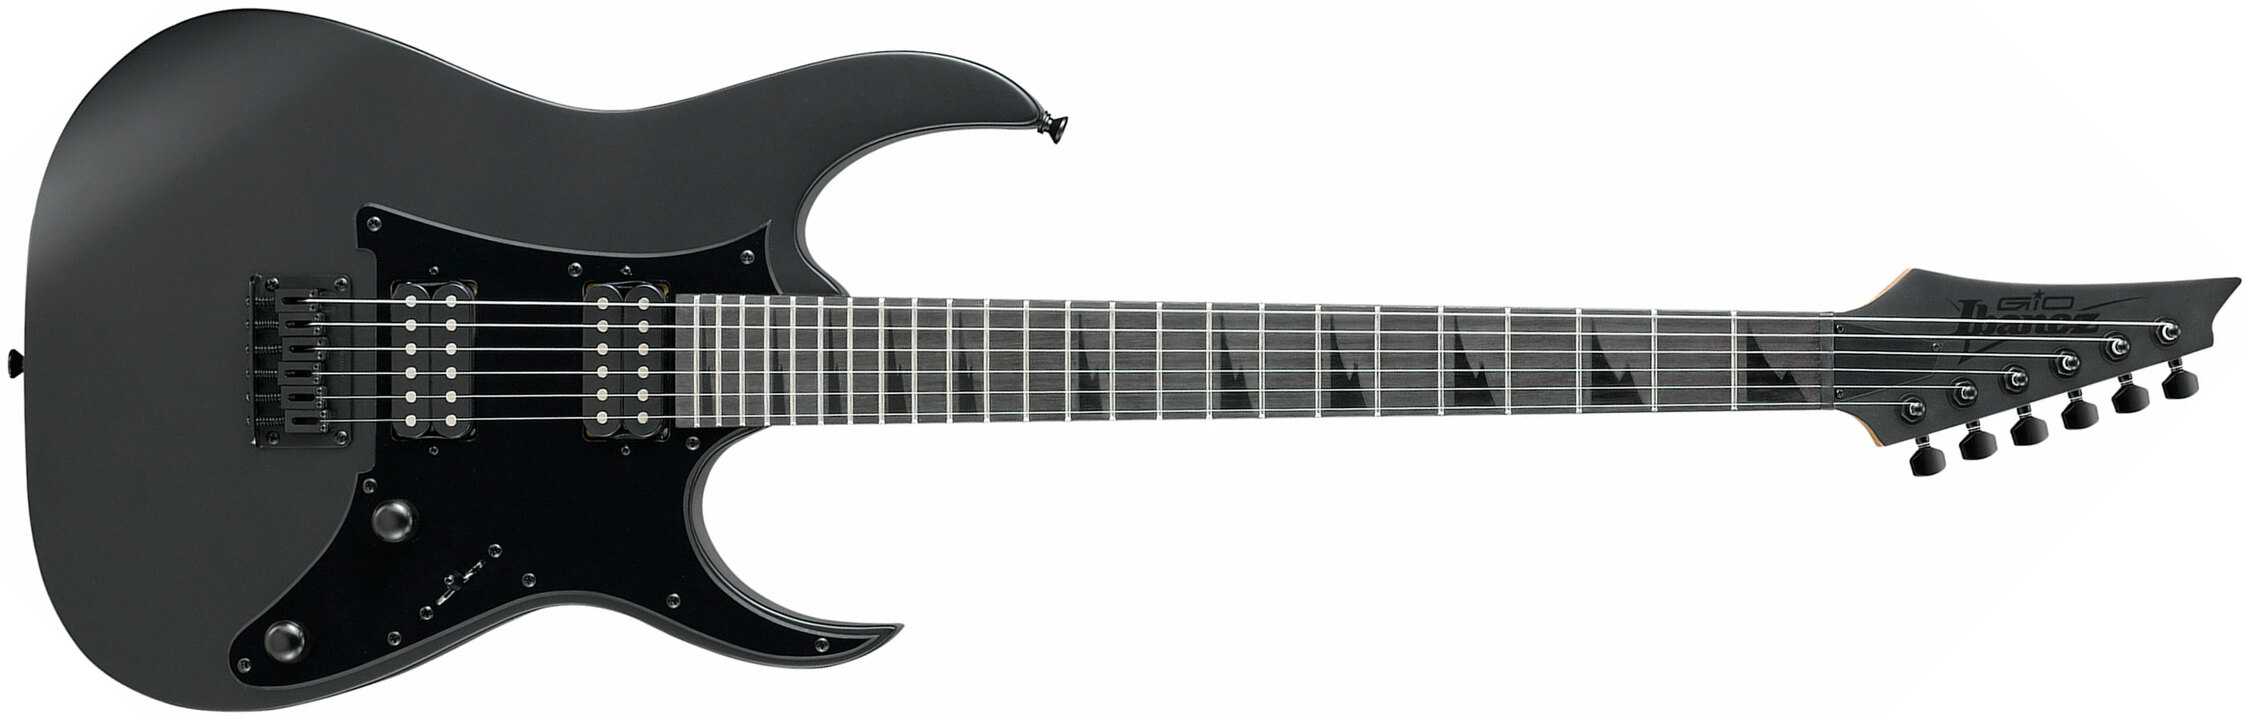 Ibanez Grgr131ex Bkf Gio Hh Ht Pur - Black Flat - Guitarra eléctrica con forma de str. - Main picture